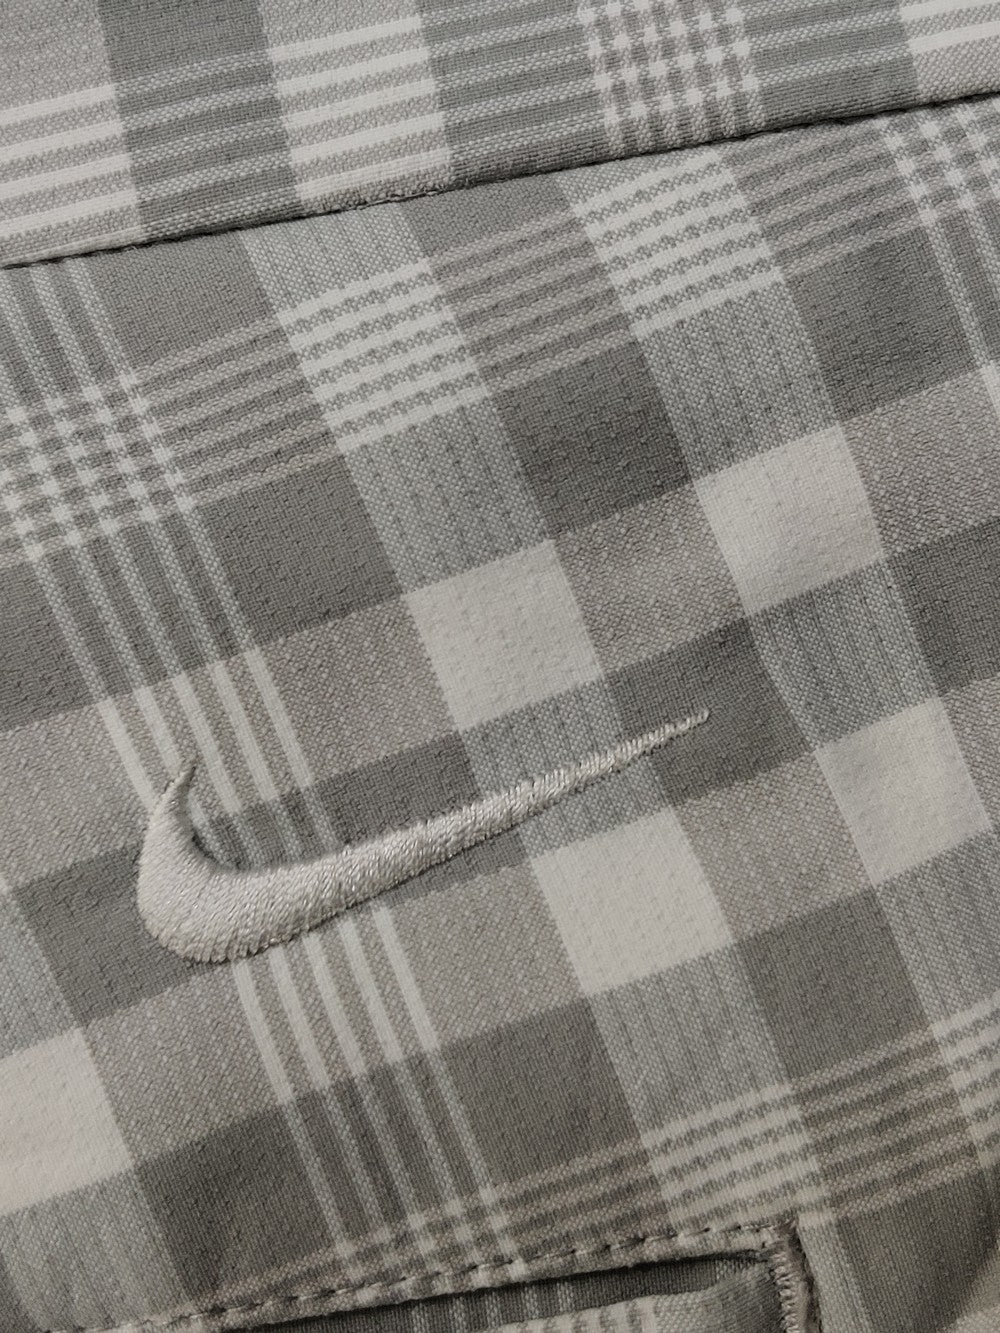 Nike Golf Branded Original Cotton Short For Men